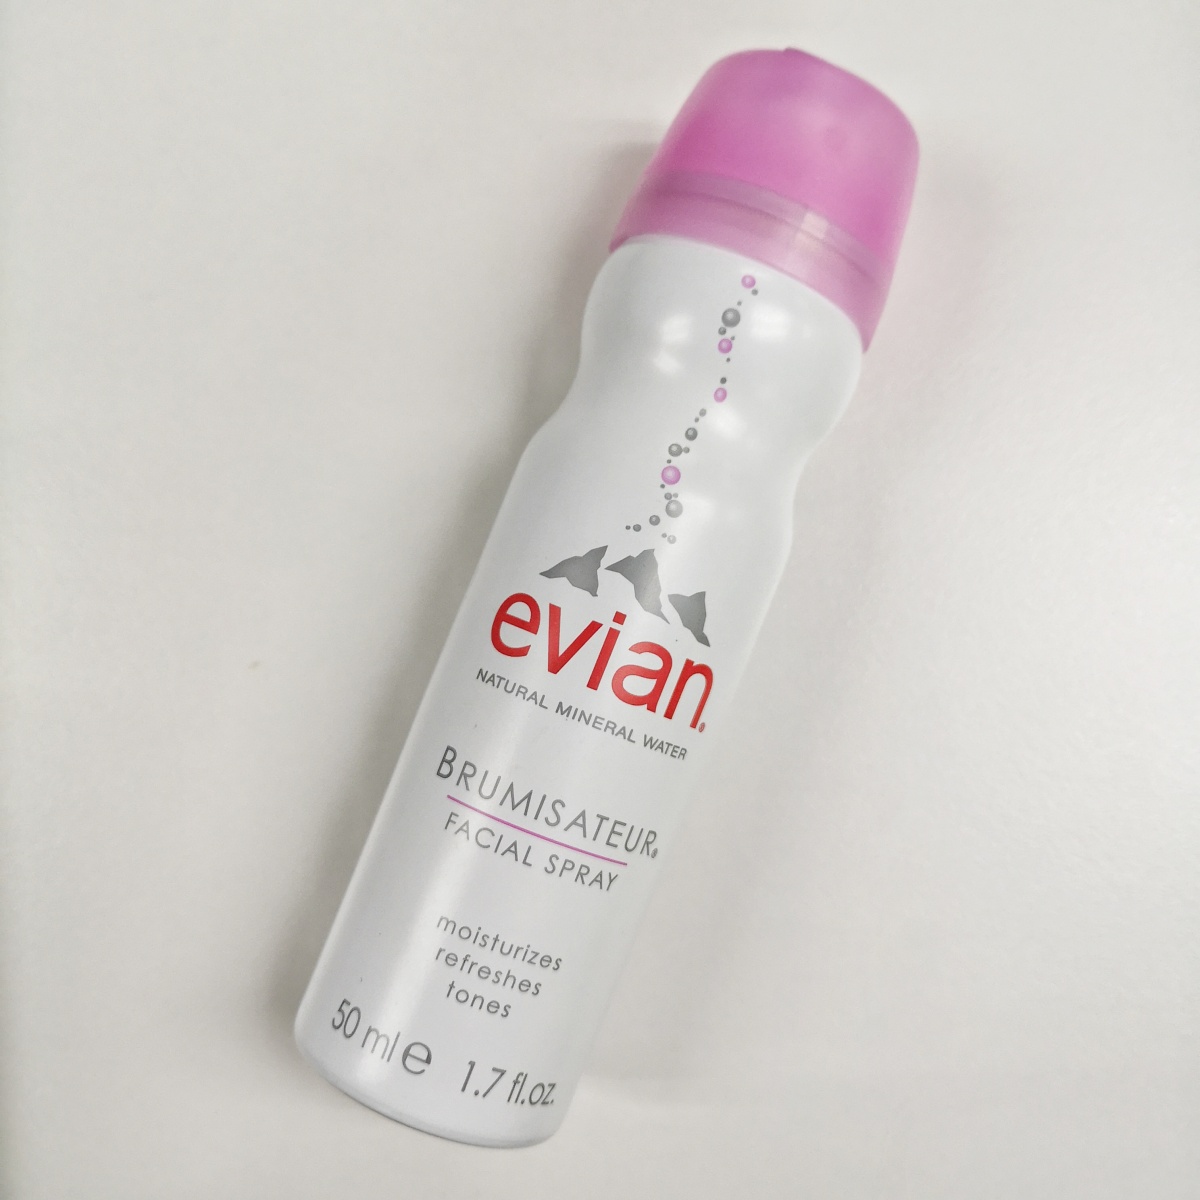 Evian: Brumisateur® Natural Mineral Water Facial Spray – The Foxy Mama Blog